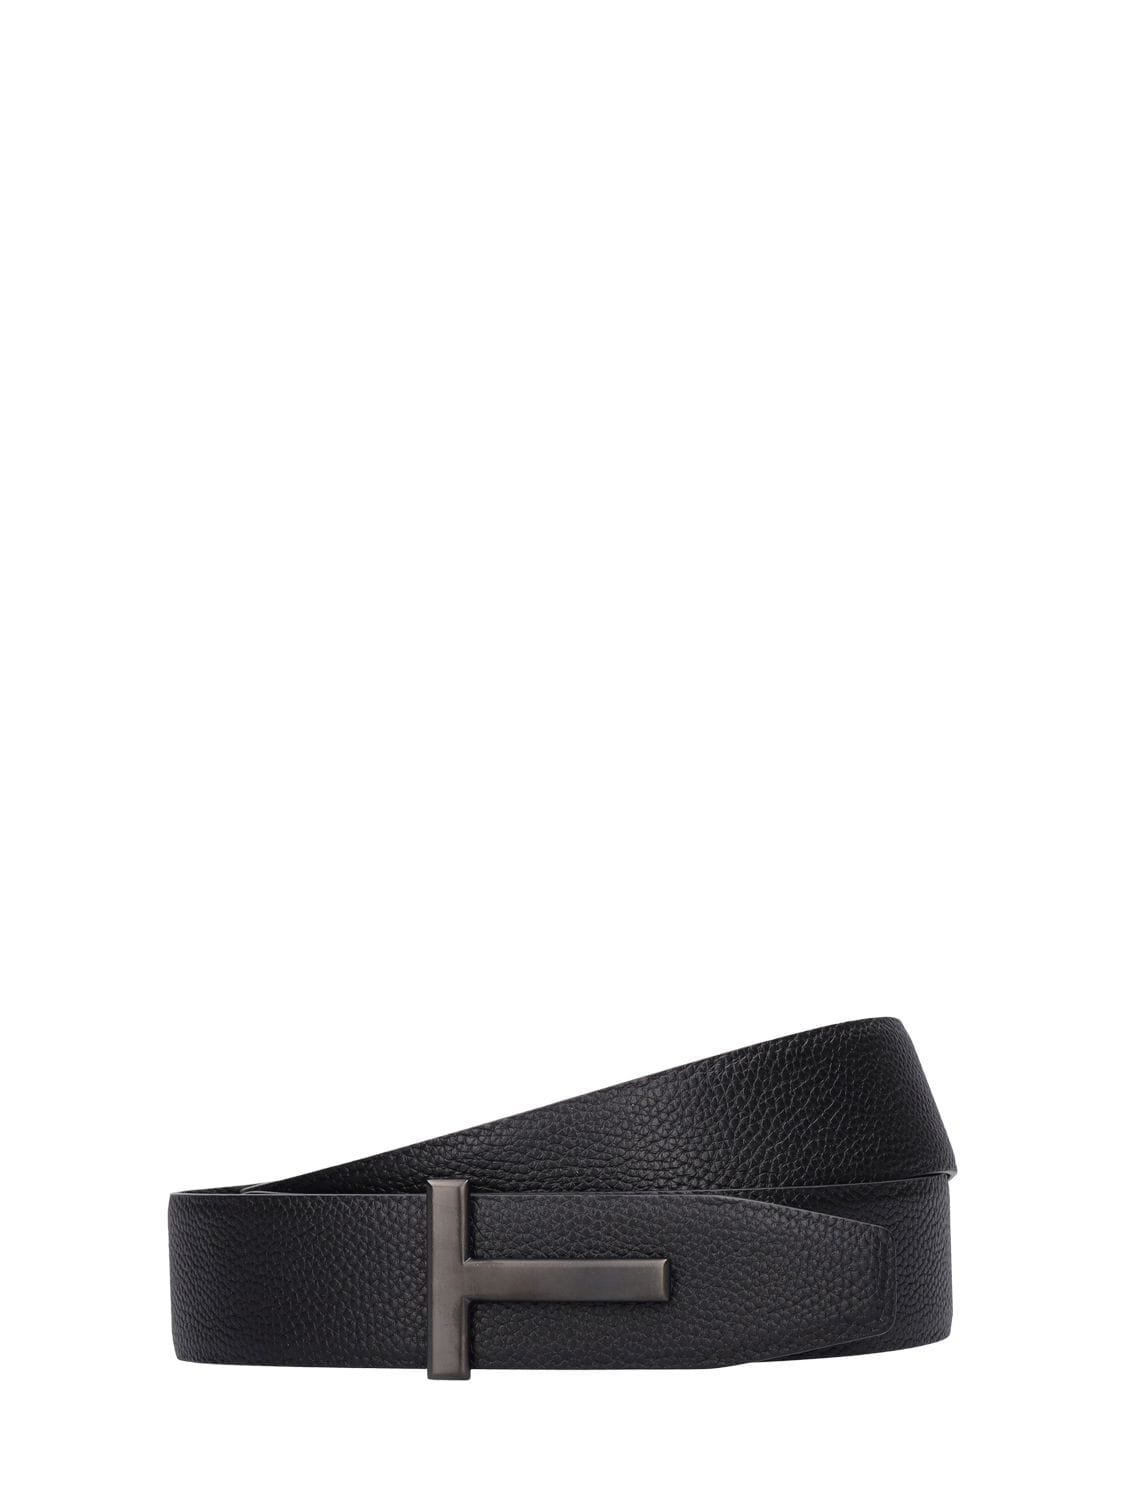 Image of Leather T Belt